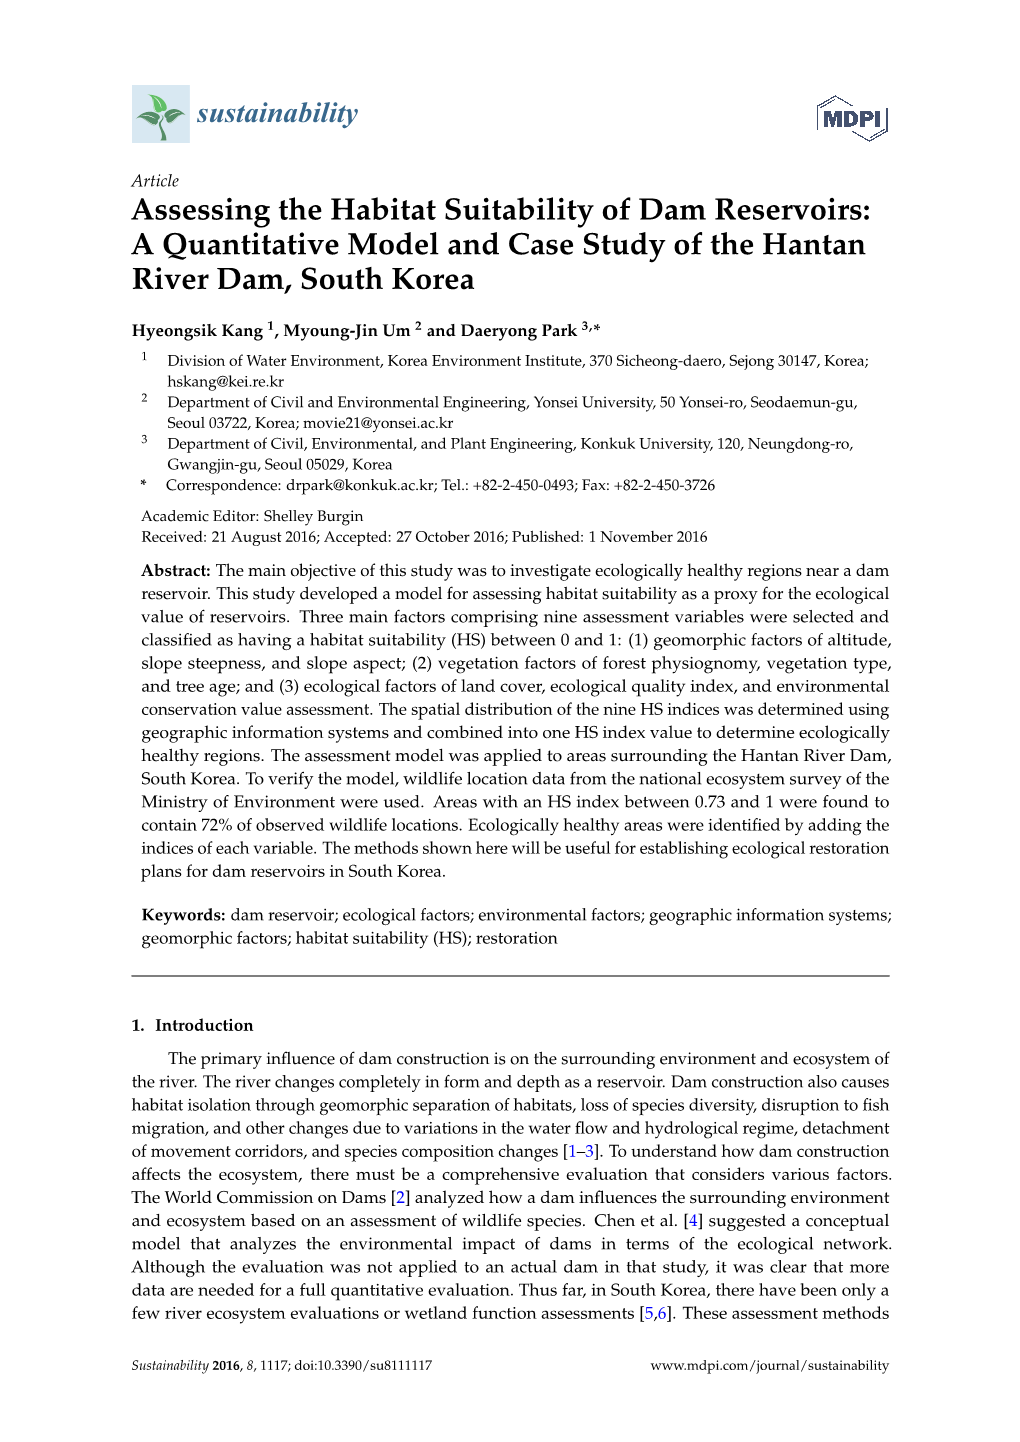 Assessing the Habitat Suitability of Dam Reservoirs: a Quantitative Model and Case Study of the Hantan River Dam, South Korea